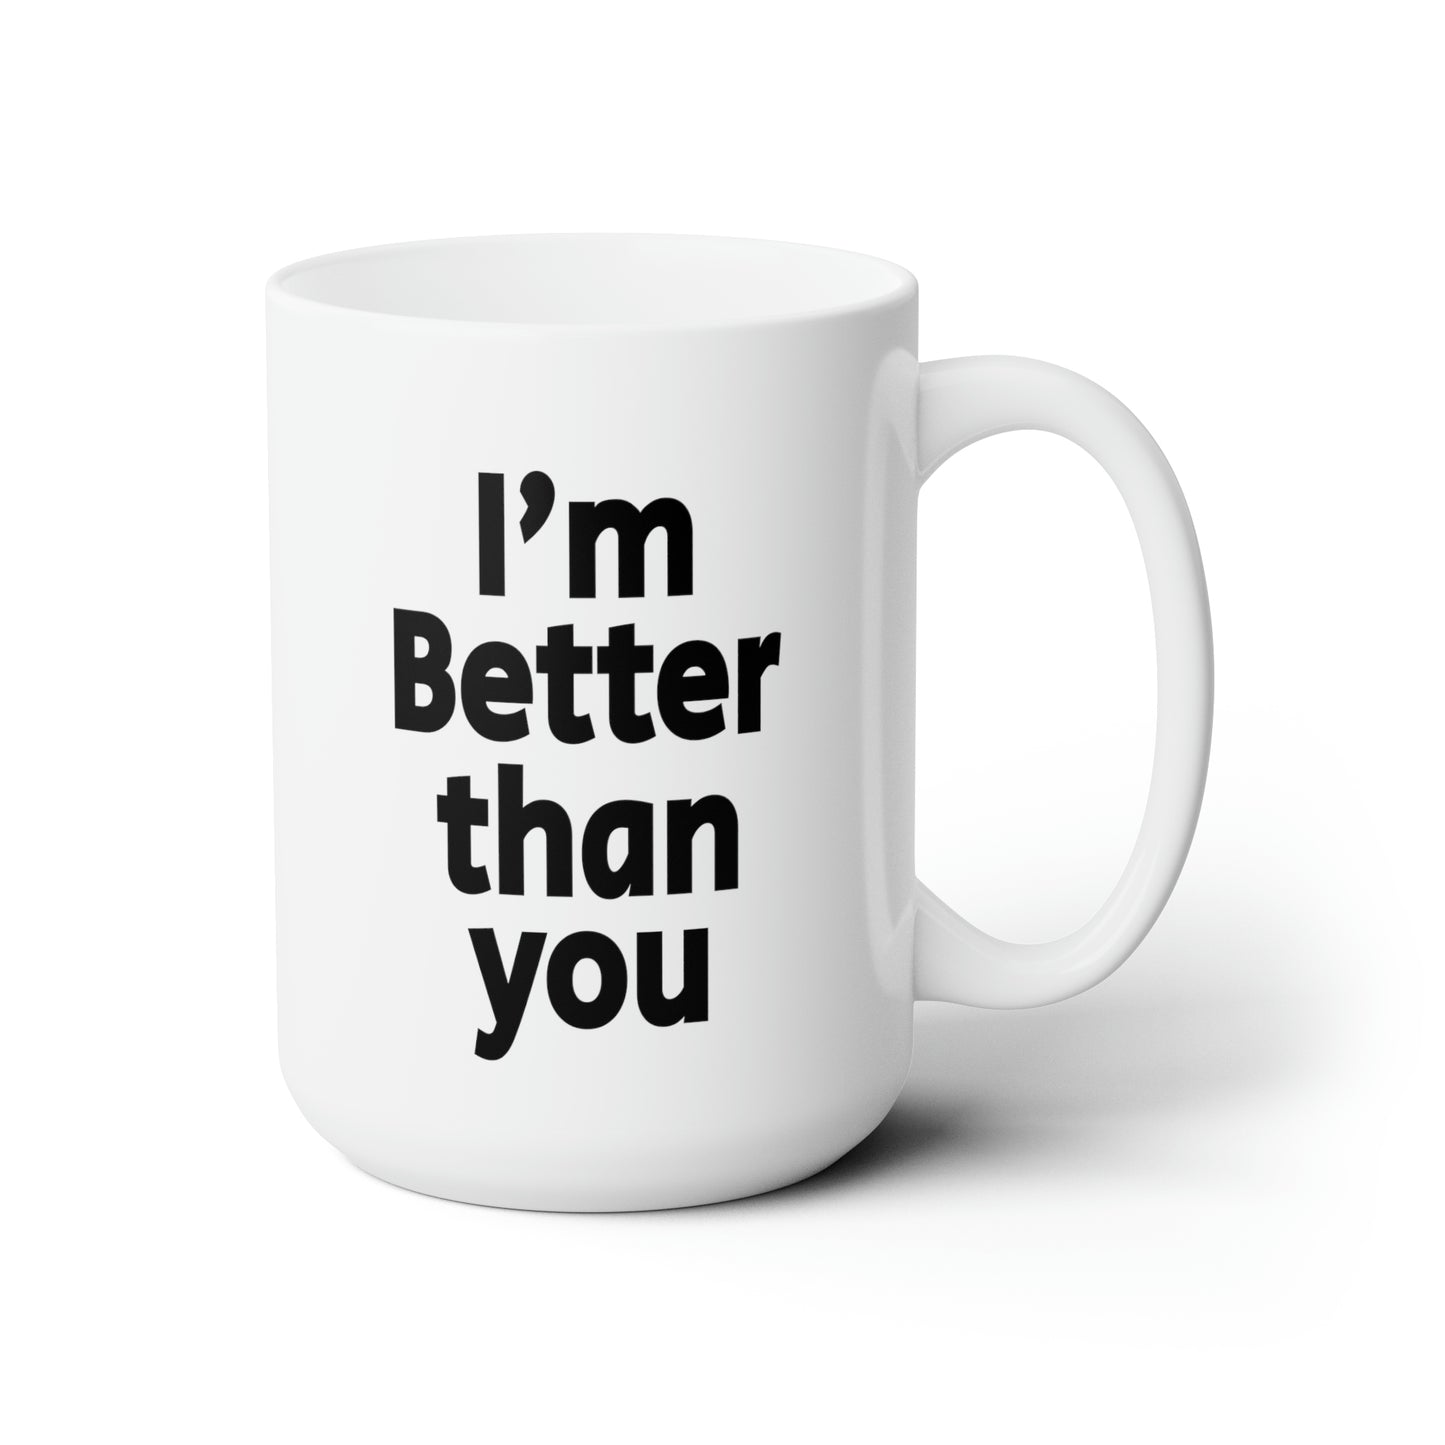 I'm Better Than You - Coffee Mug